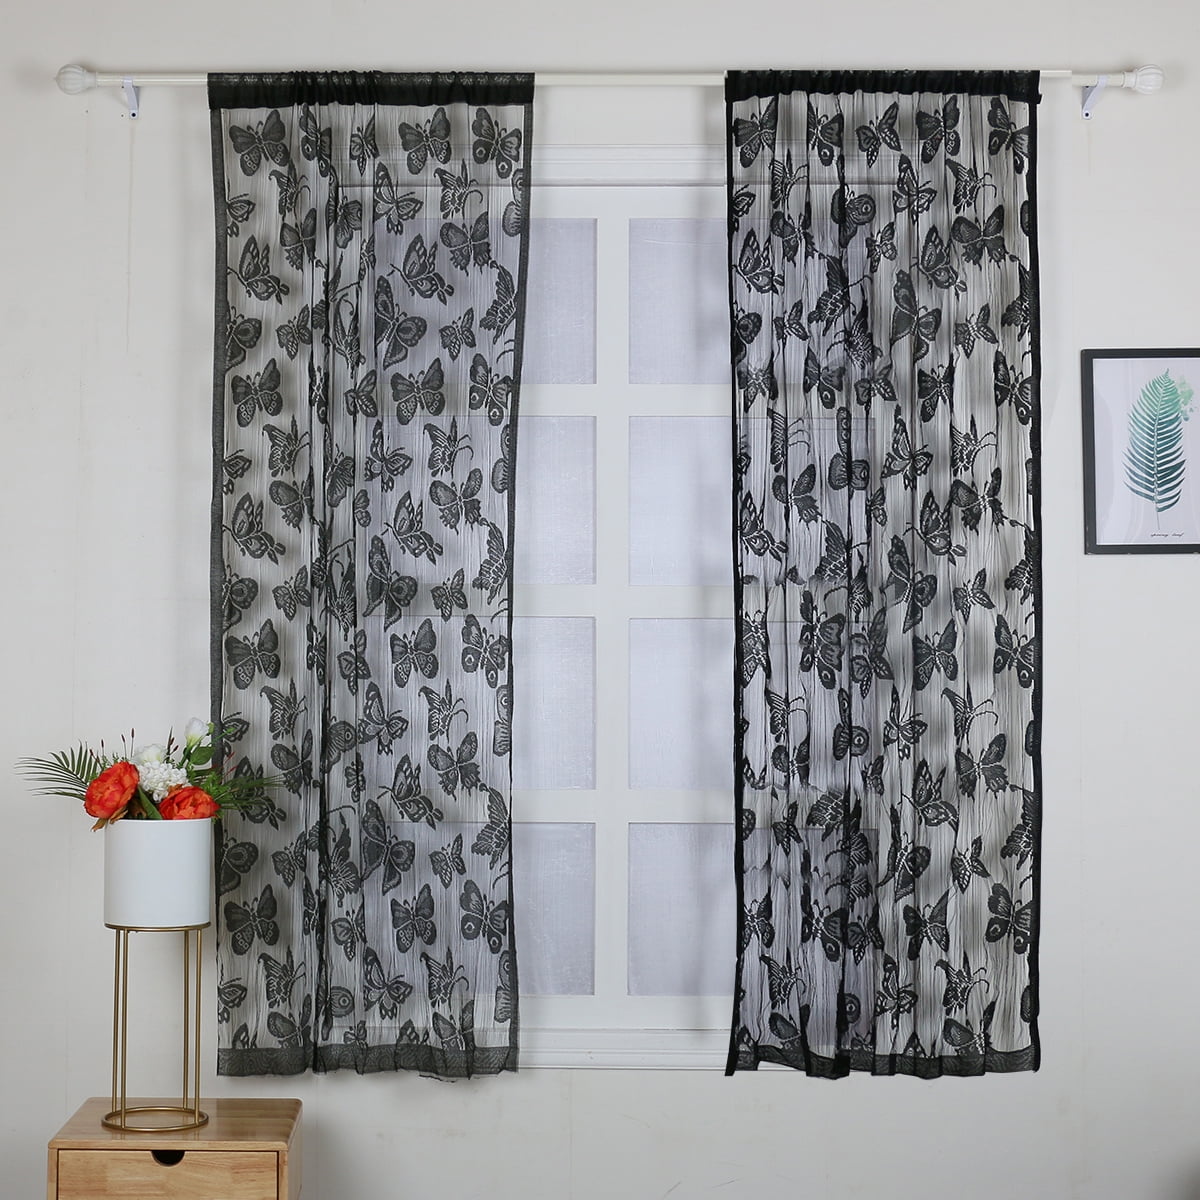 Tassel Butterfly String Curtain Window Door Divider Voile Net Curtain Fly Screen